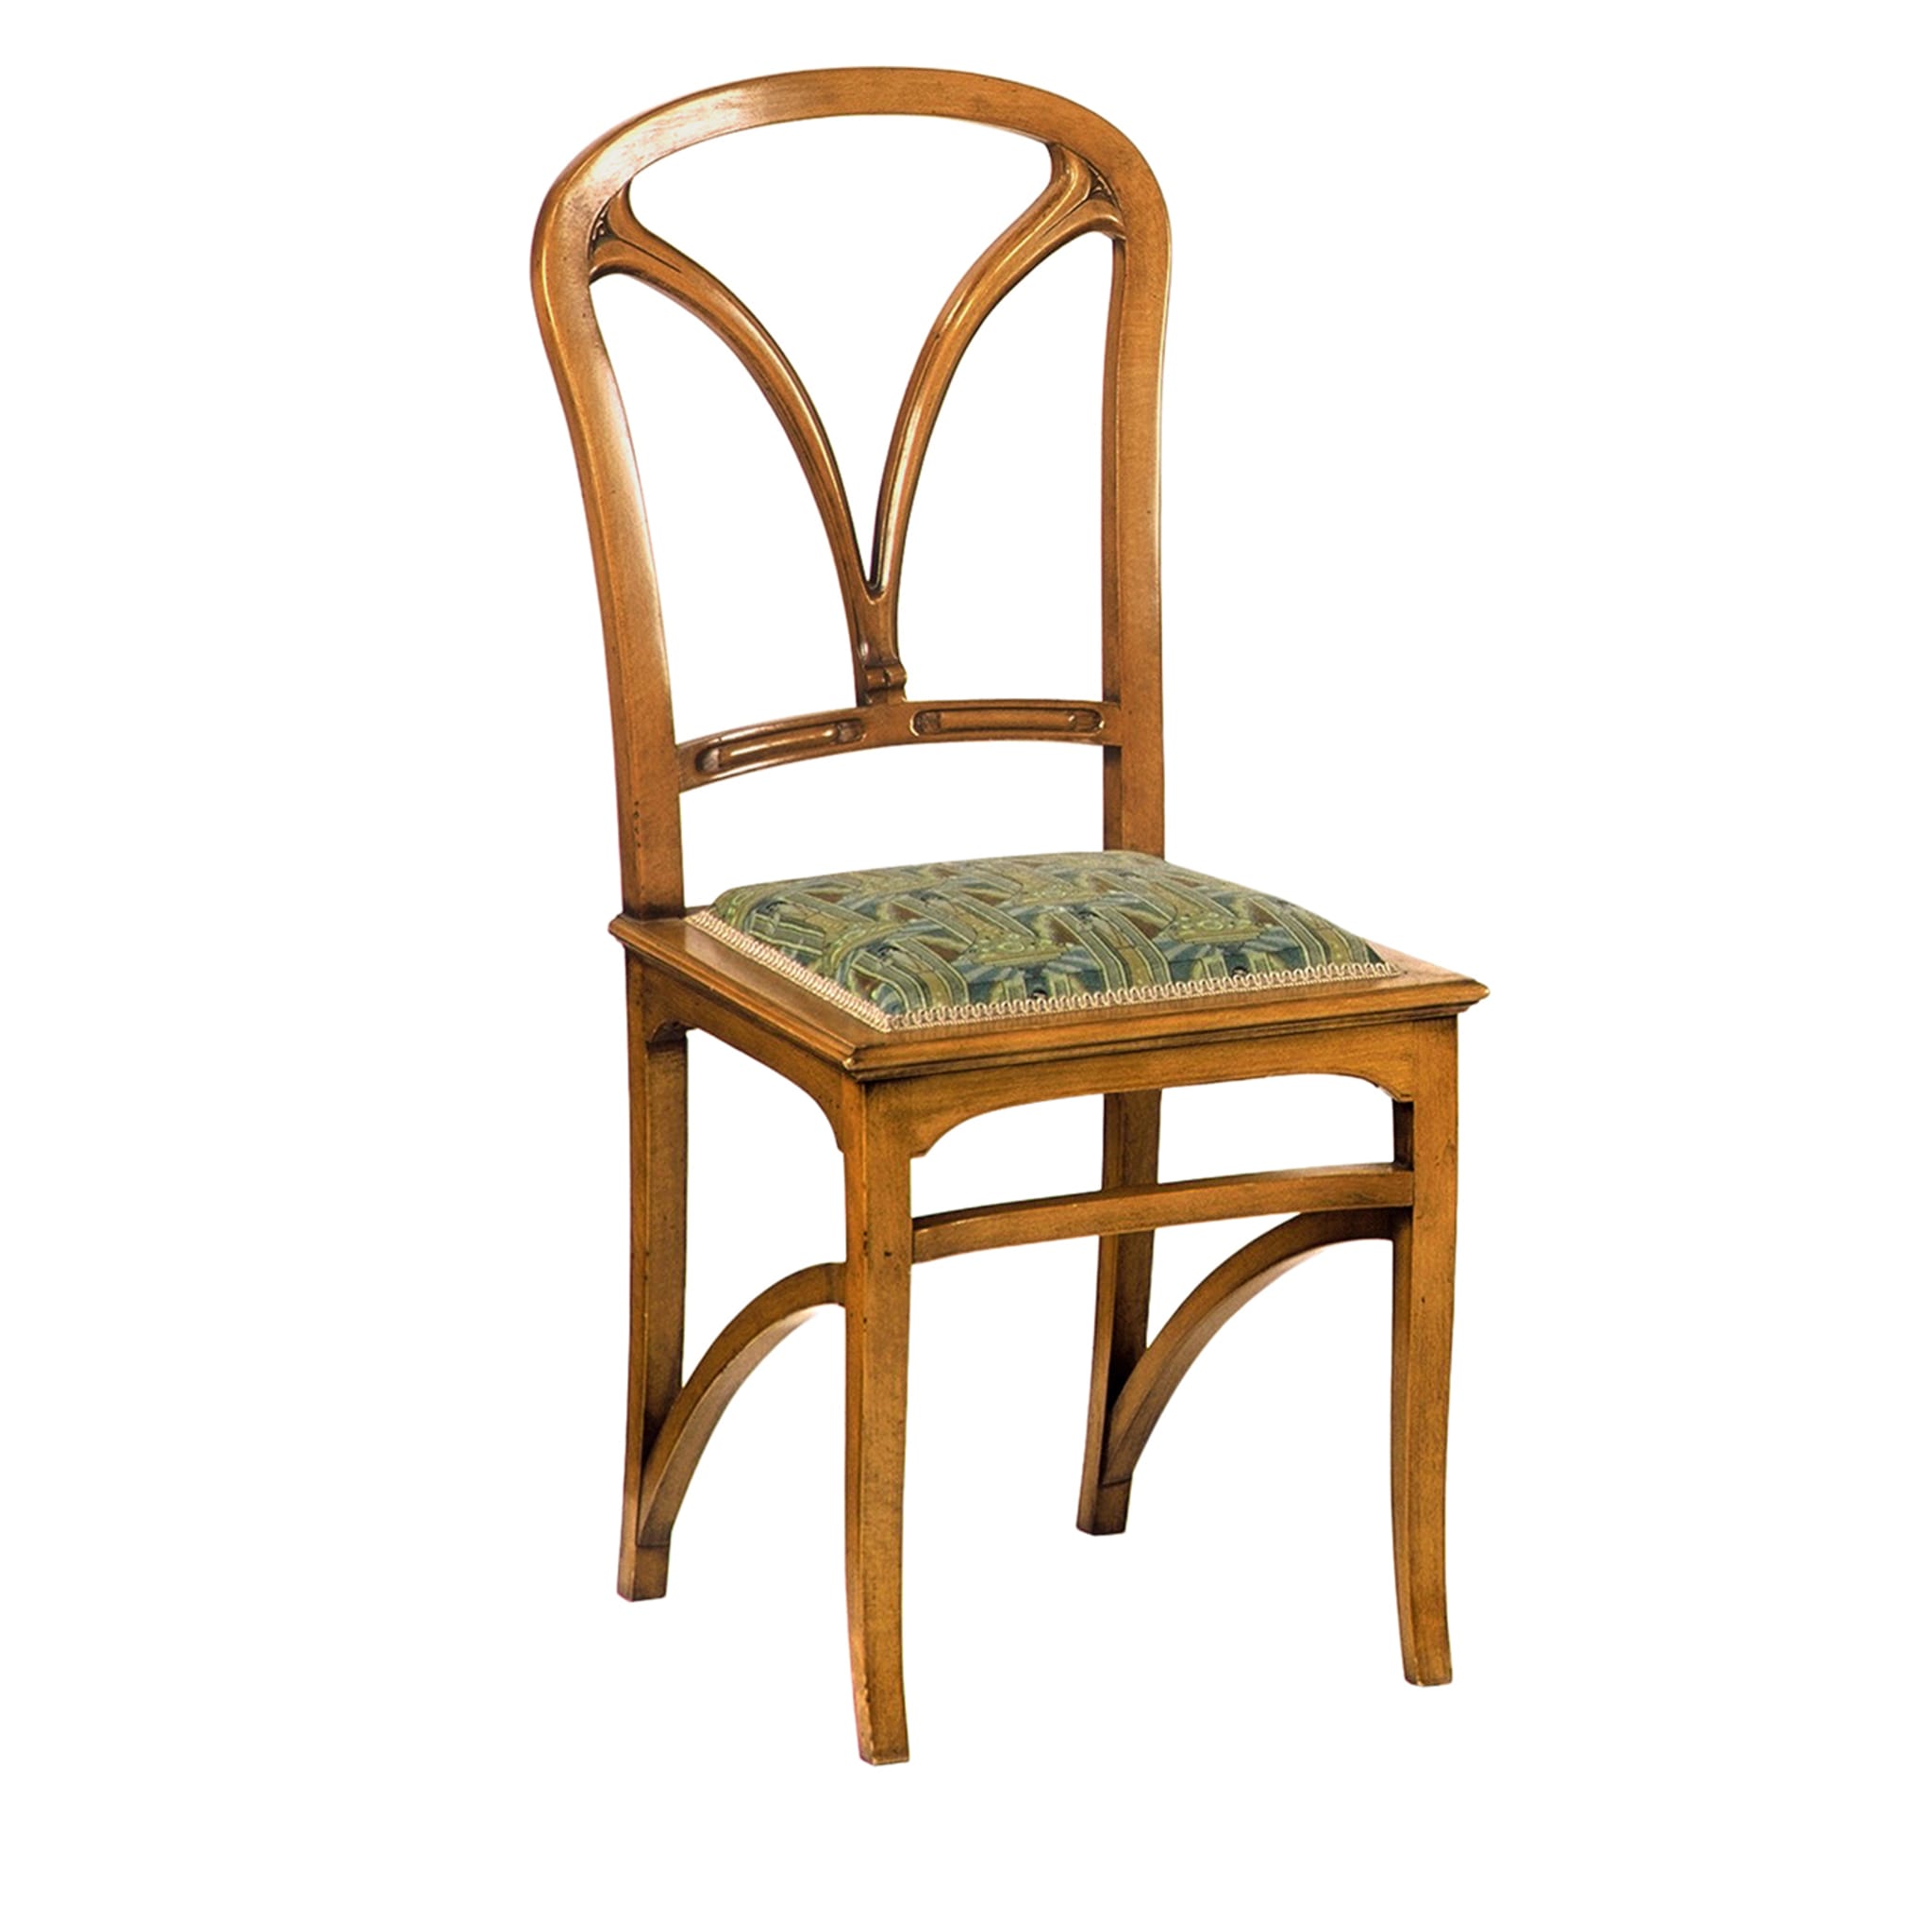 Italian Art Nouveau-Style Chair  - Main view